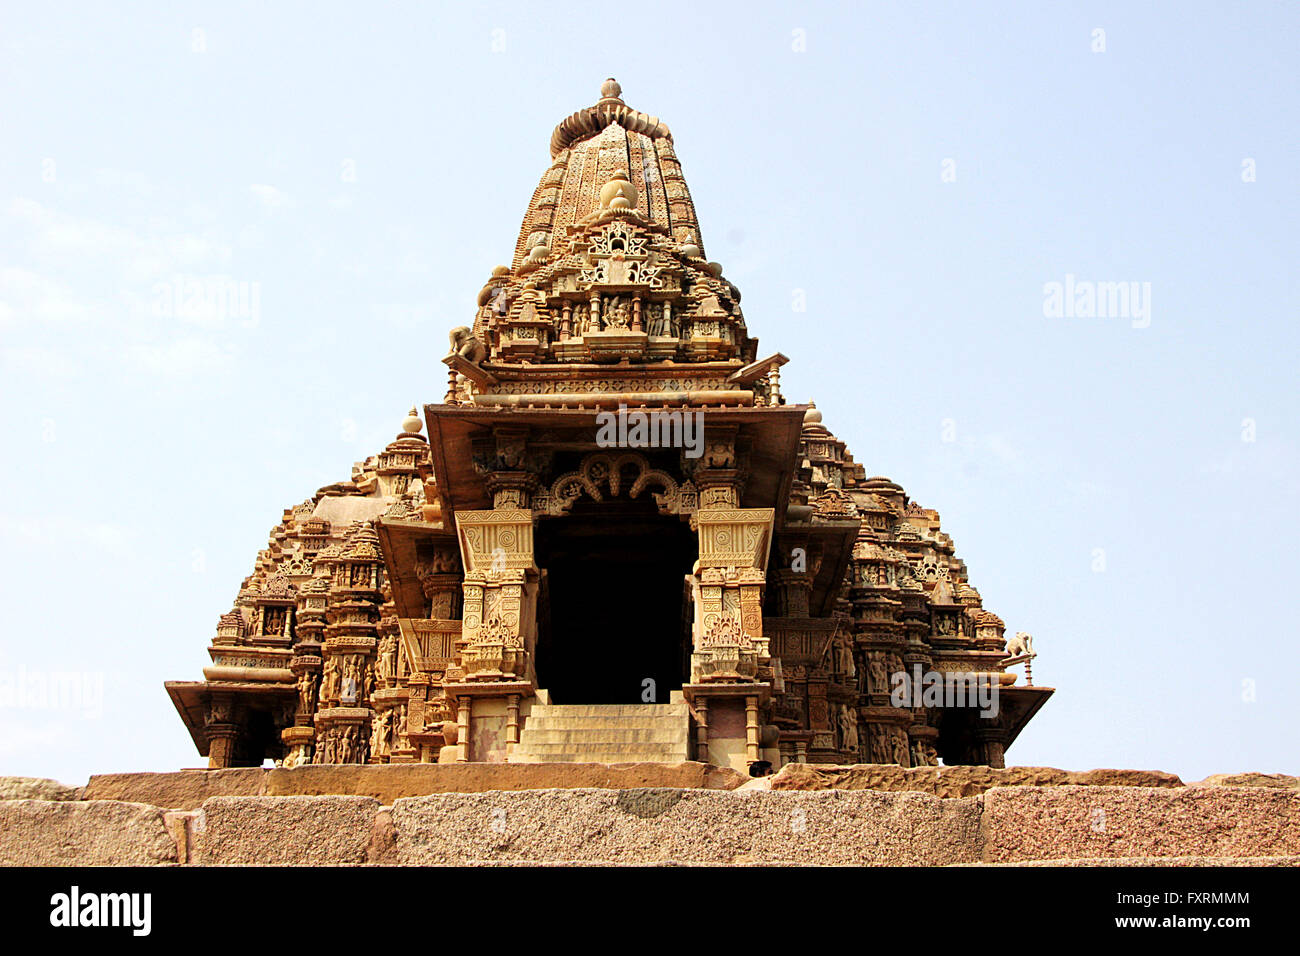 Low angle, vue frontale de Kandariya Mahadev Temple, sous groupe occidental des Temples, Khajuraho, Madhya Pradesh, Inde, Asie Banque D'Images